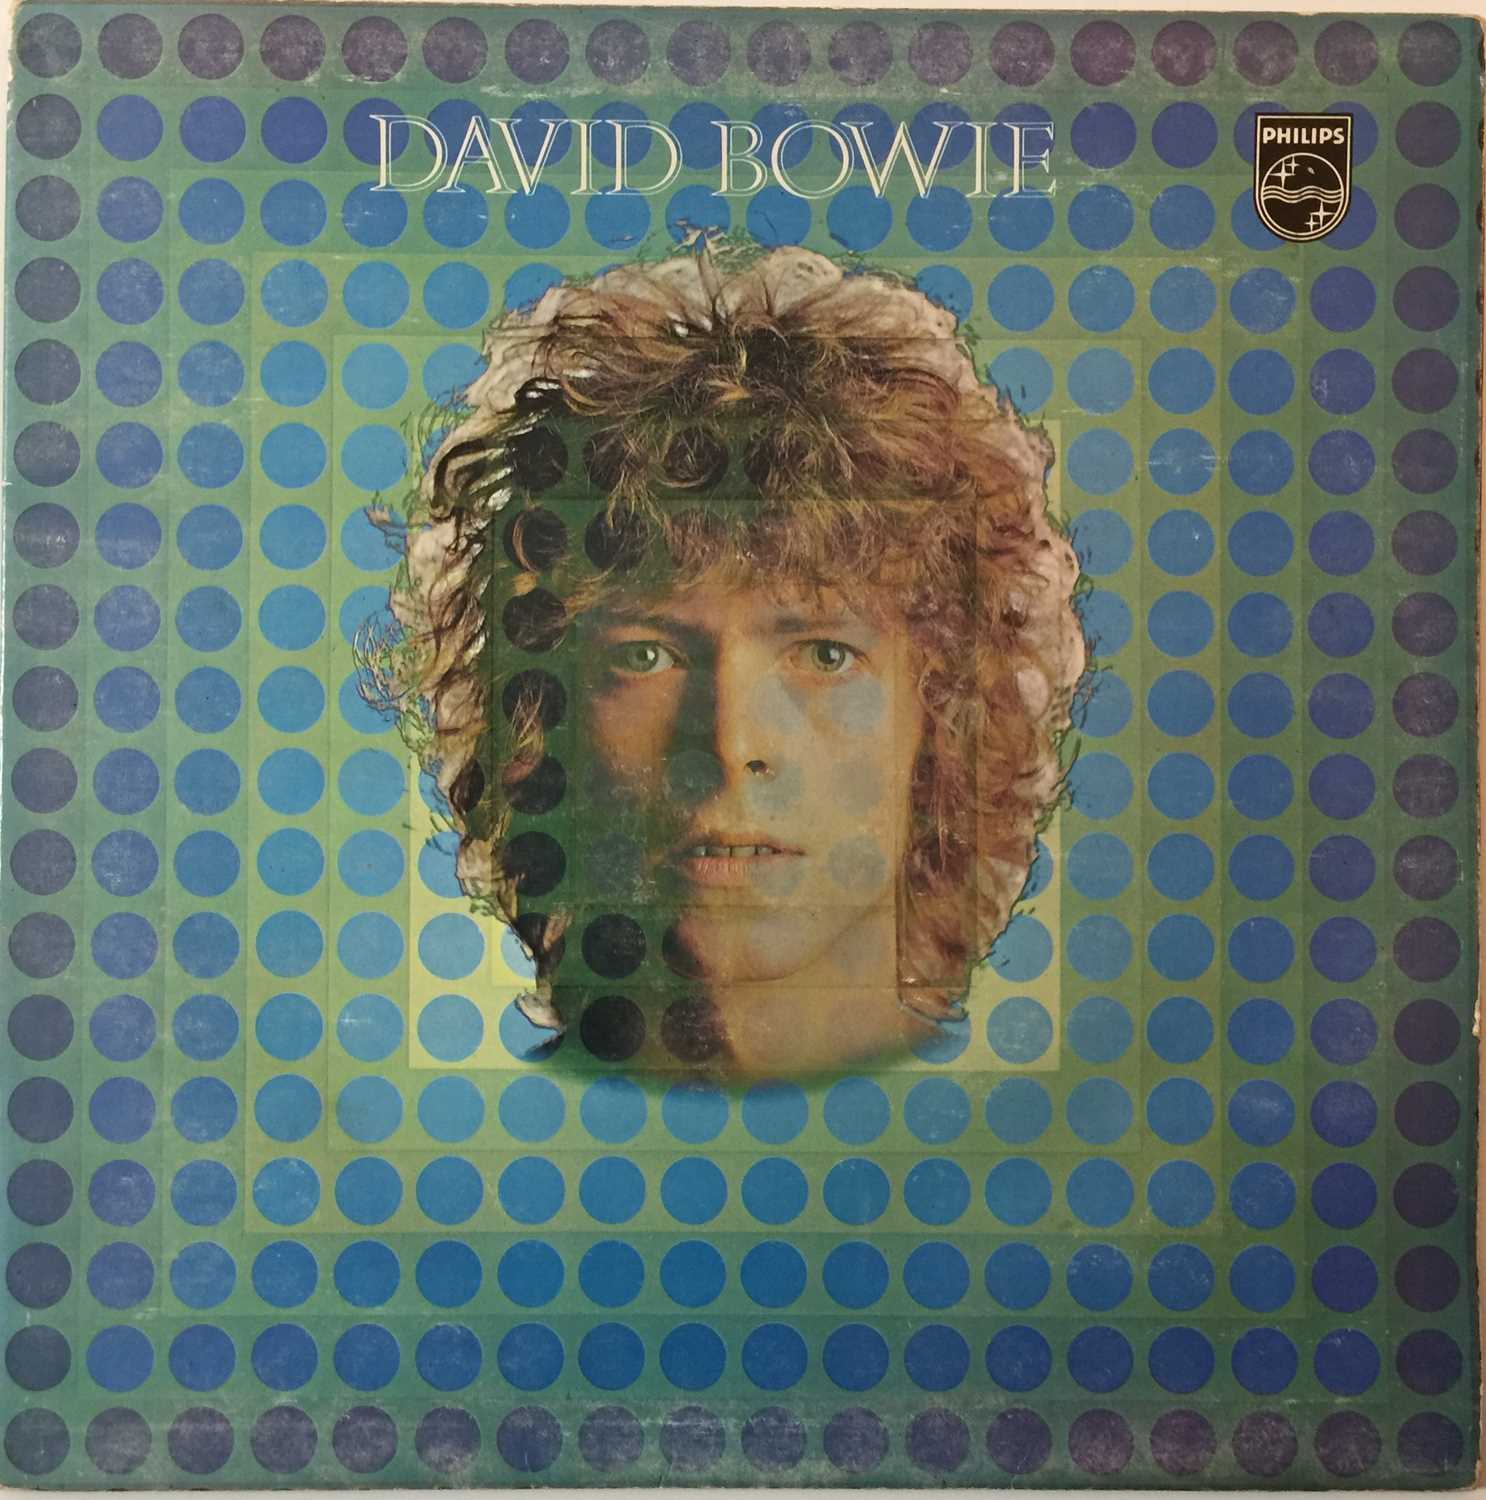 Lot 58 - David Bowie - David Bowie LP (Original UK Philips Pressing - SBL 7912)